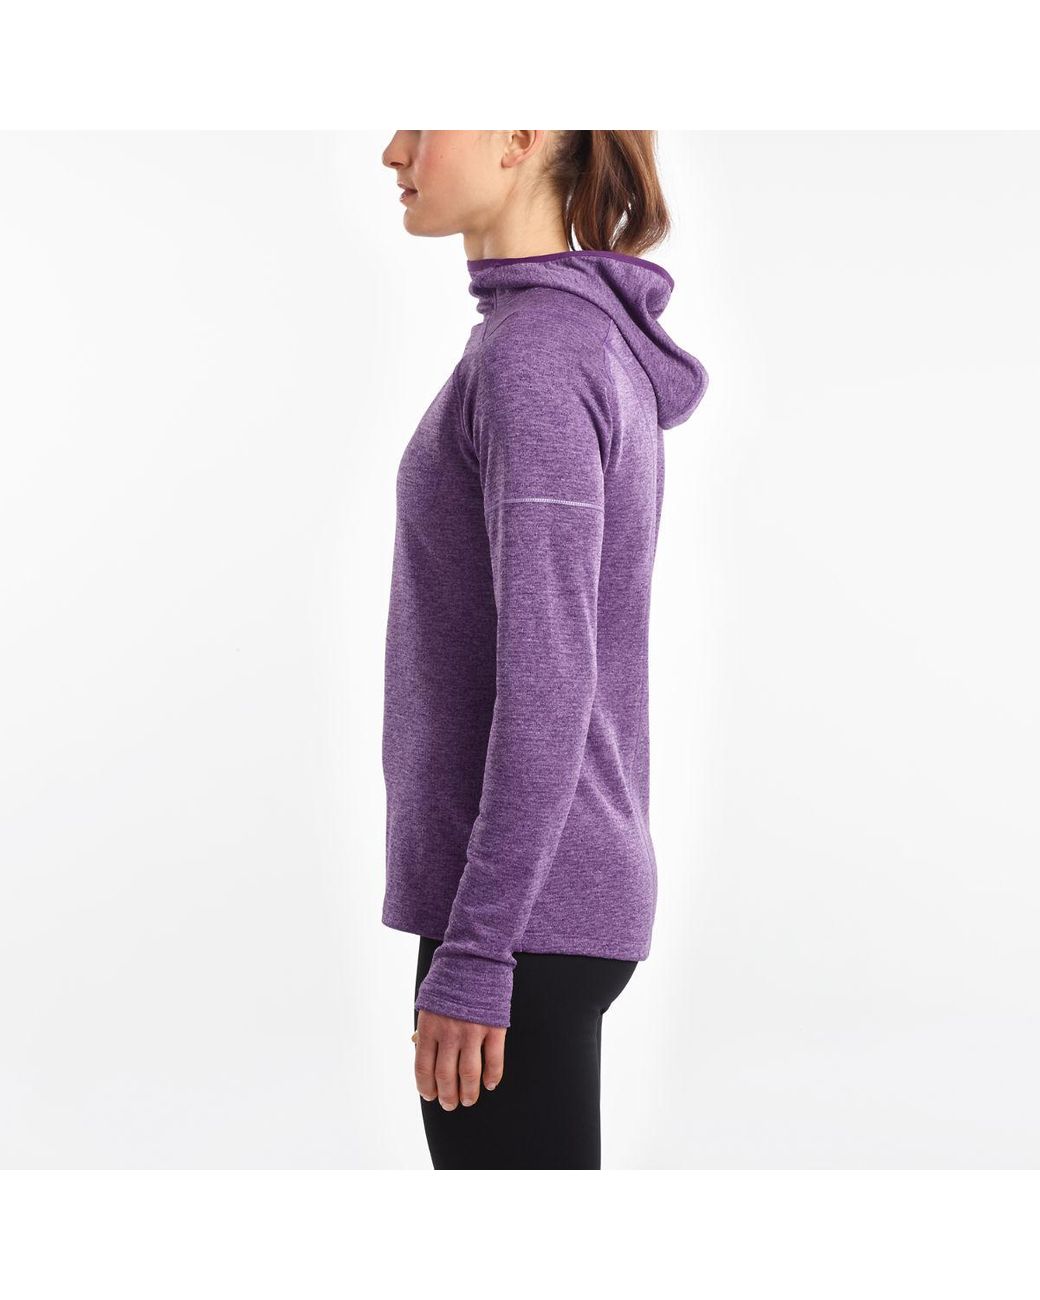 saucony hoodie purple